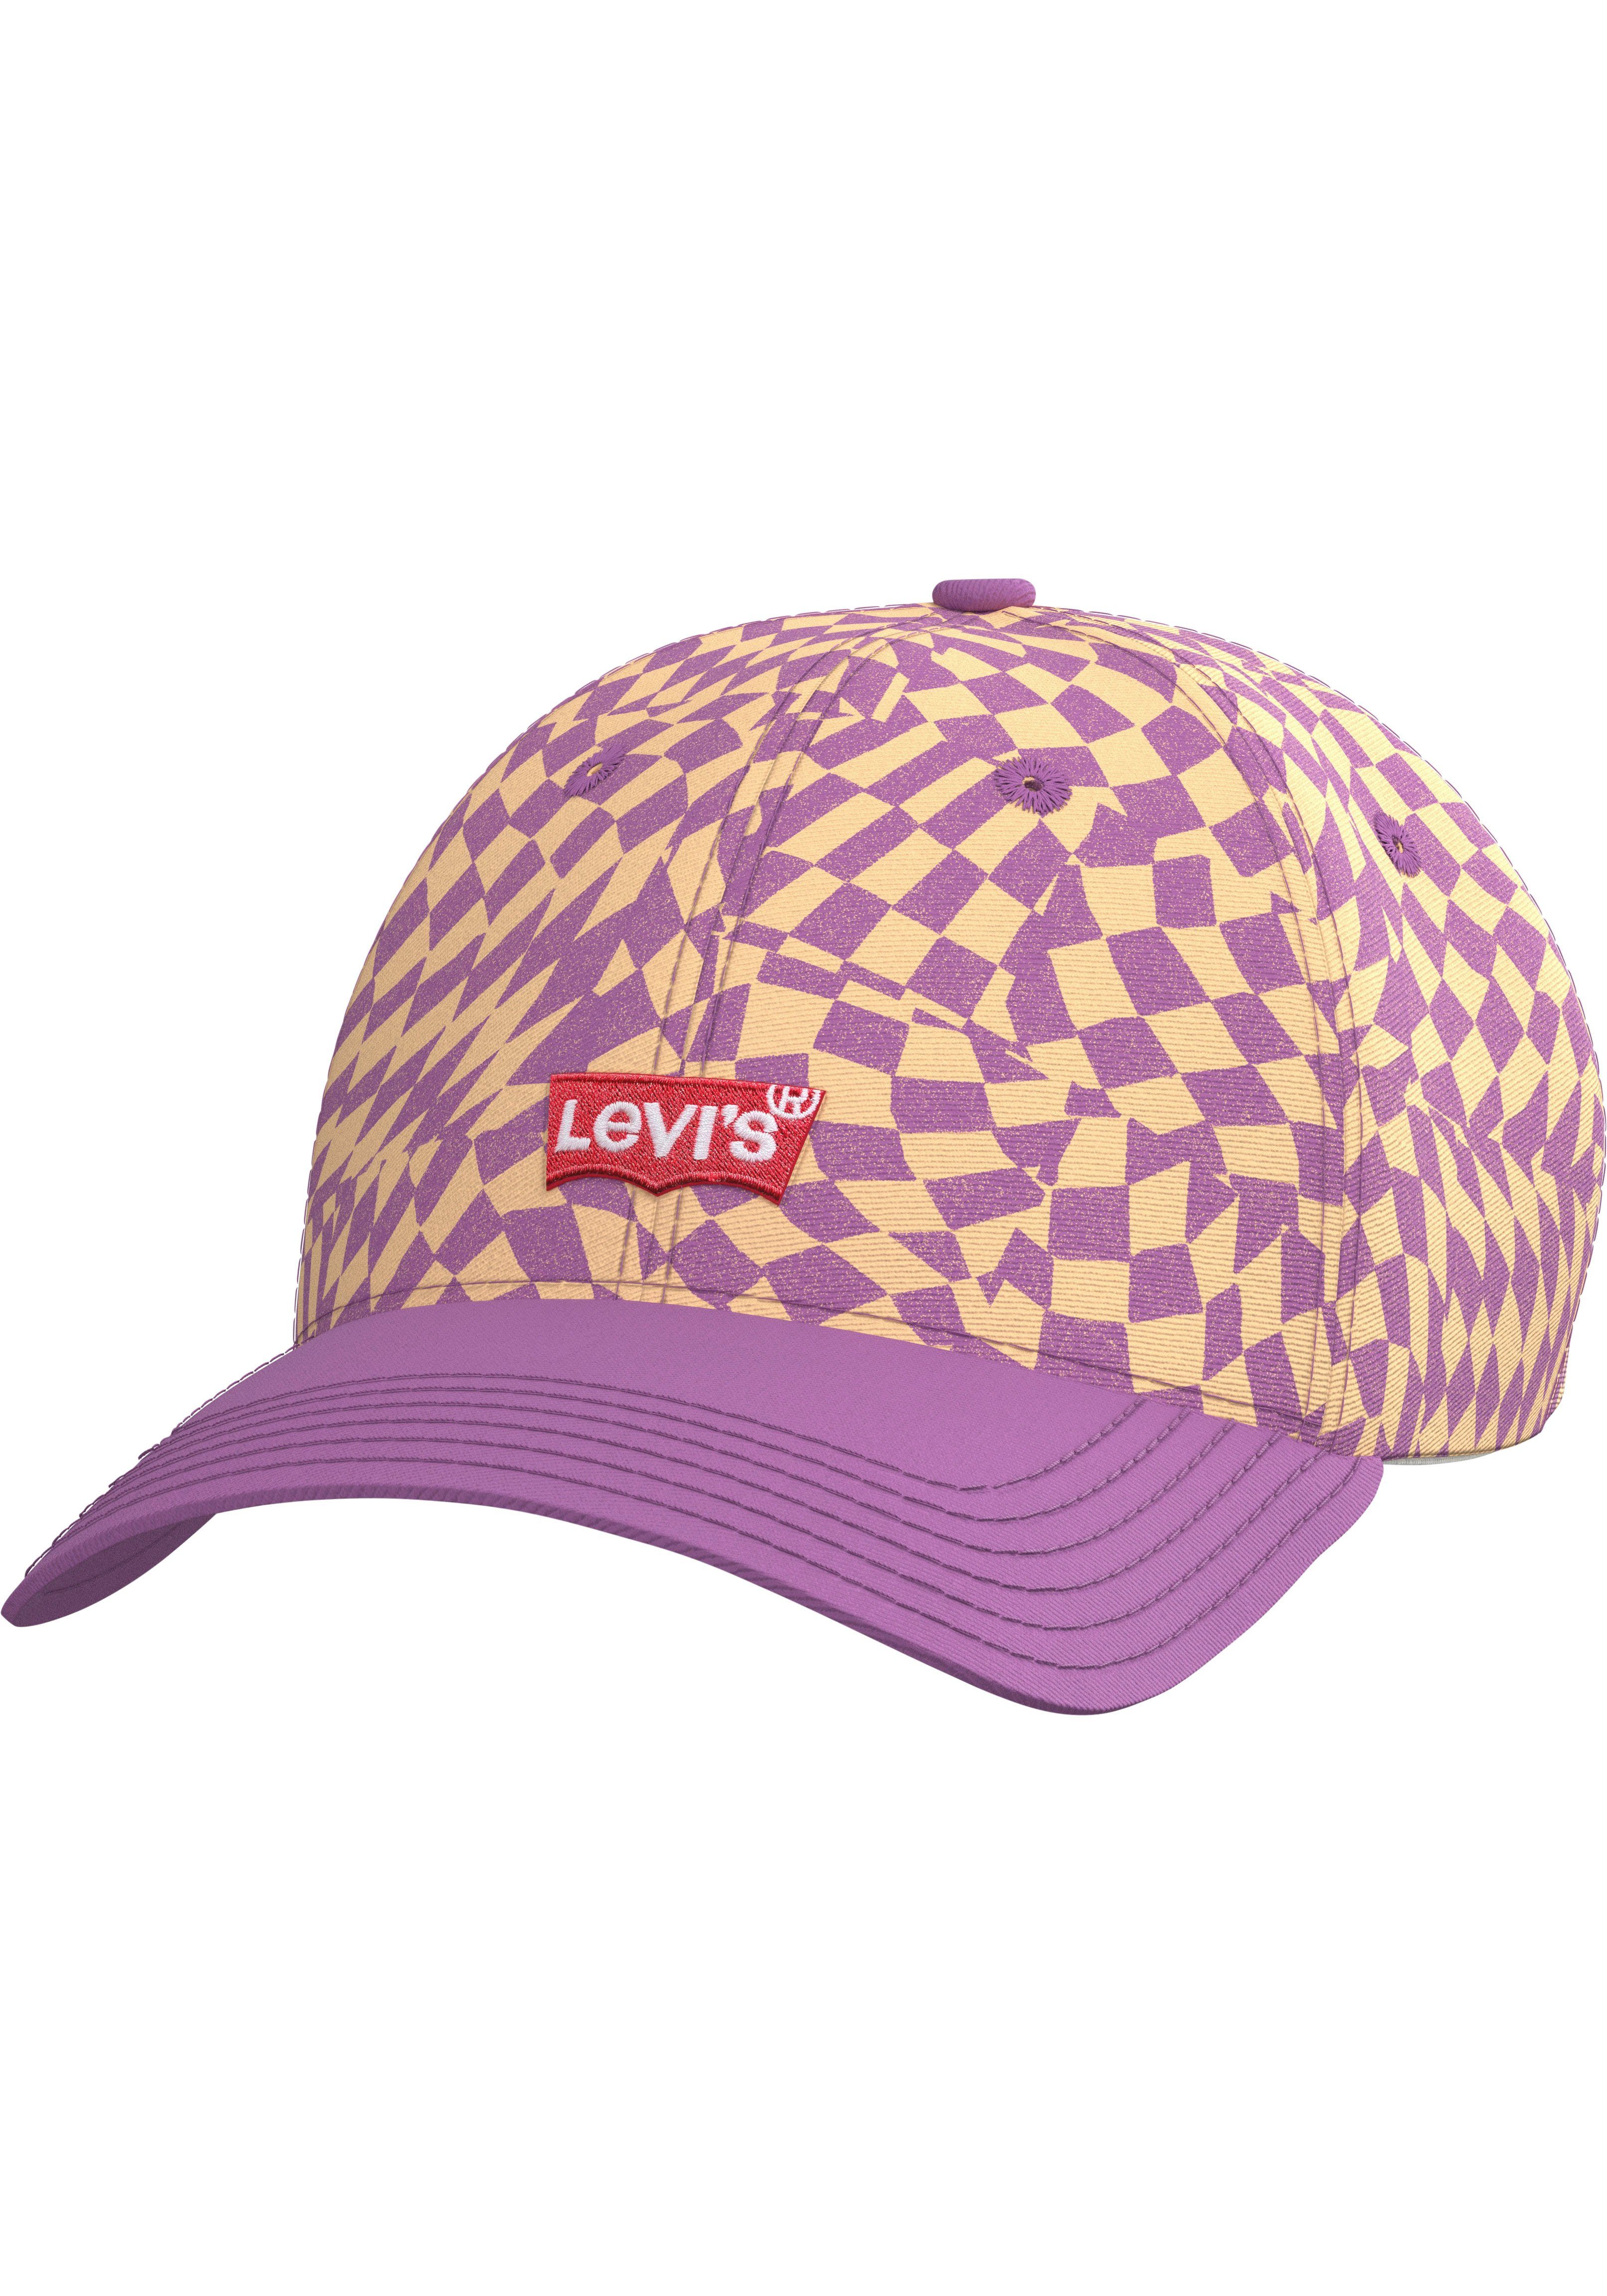 Levi's® Baseball Cap Housemark regular Flexfit fuchsia